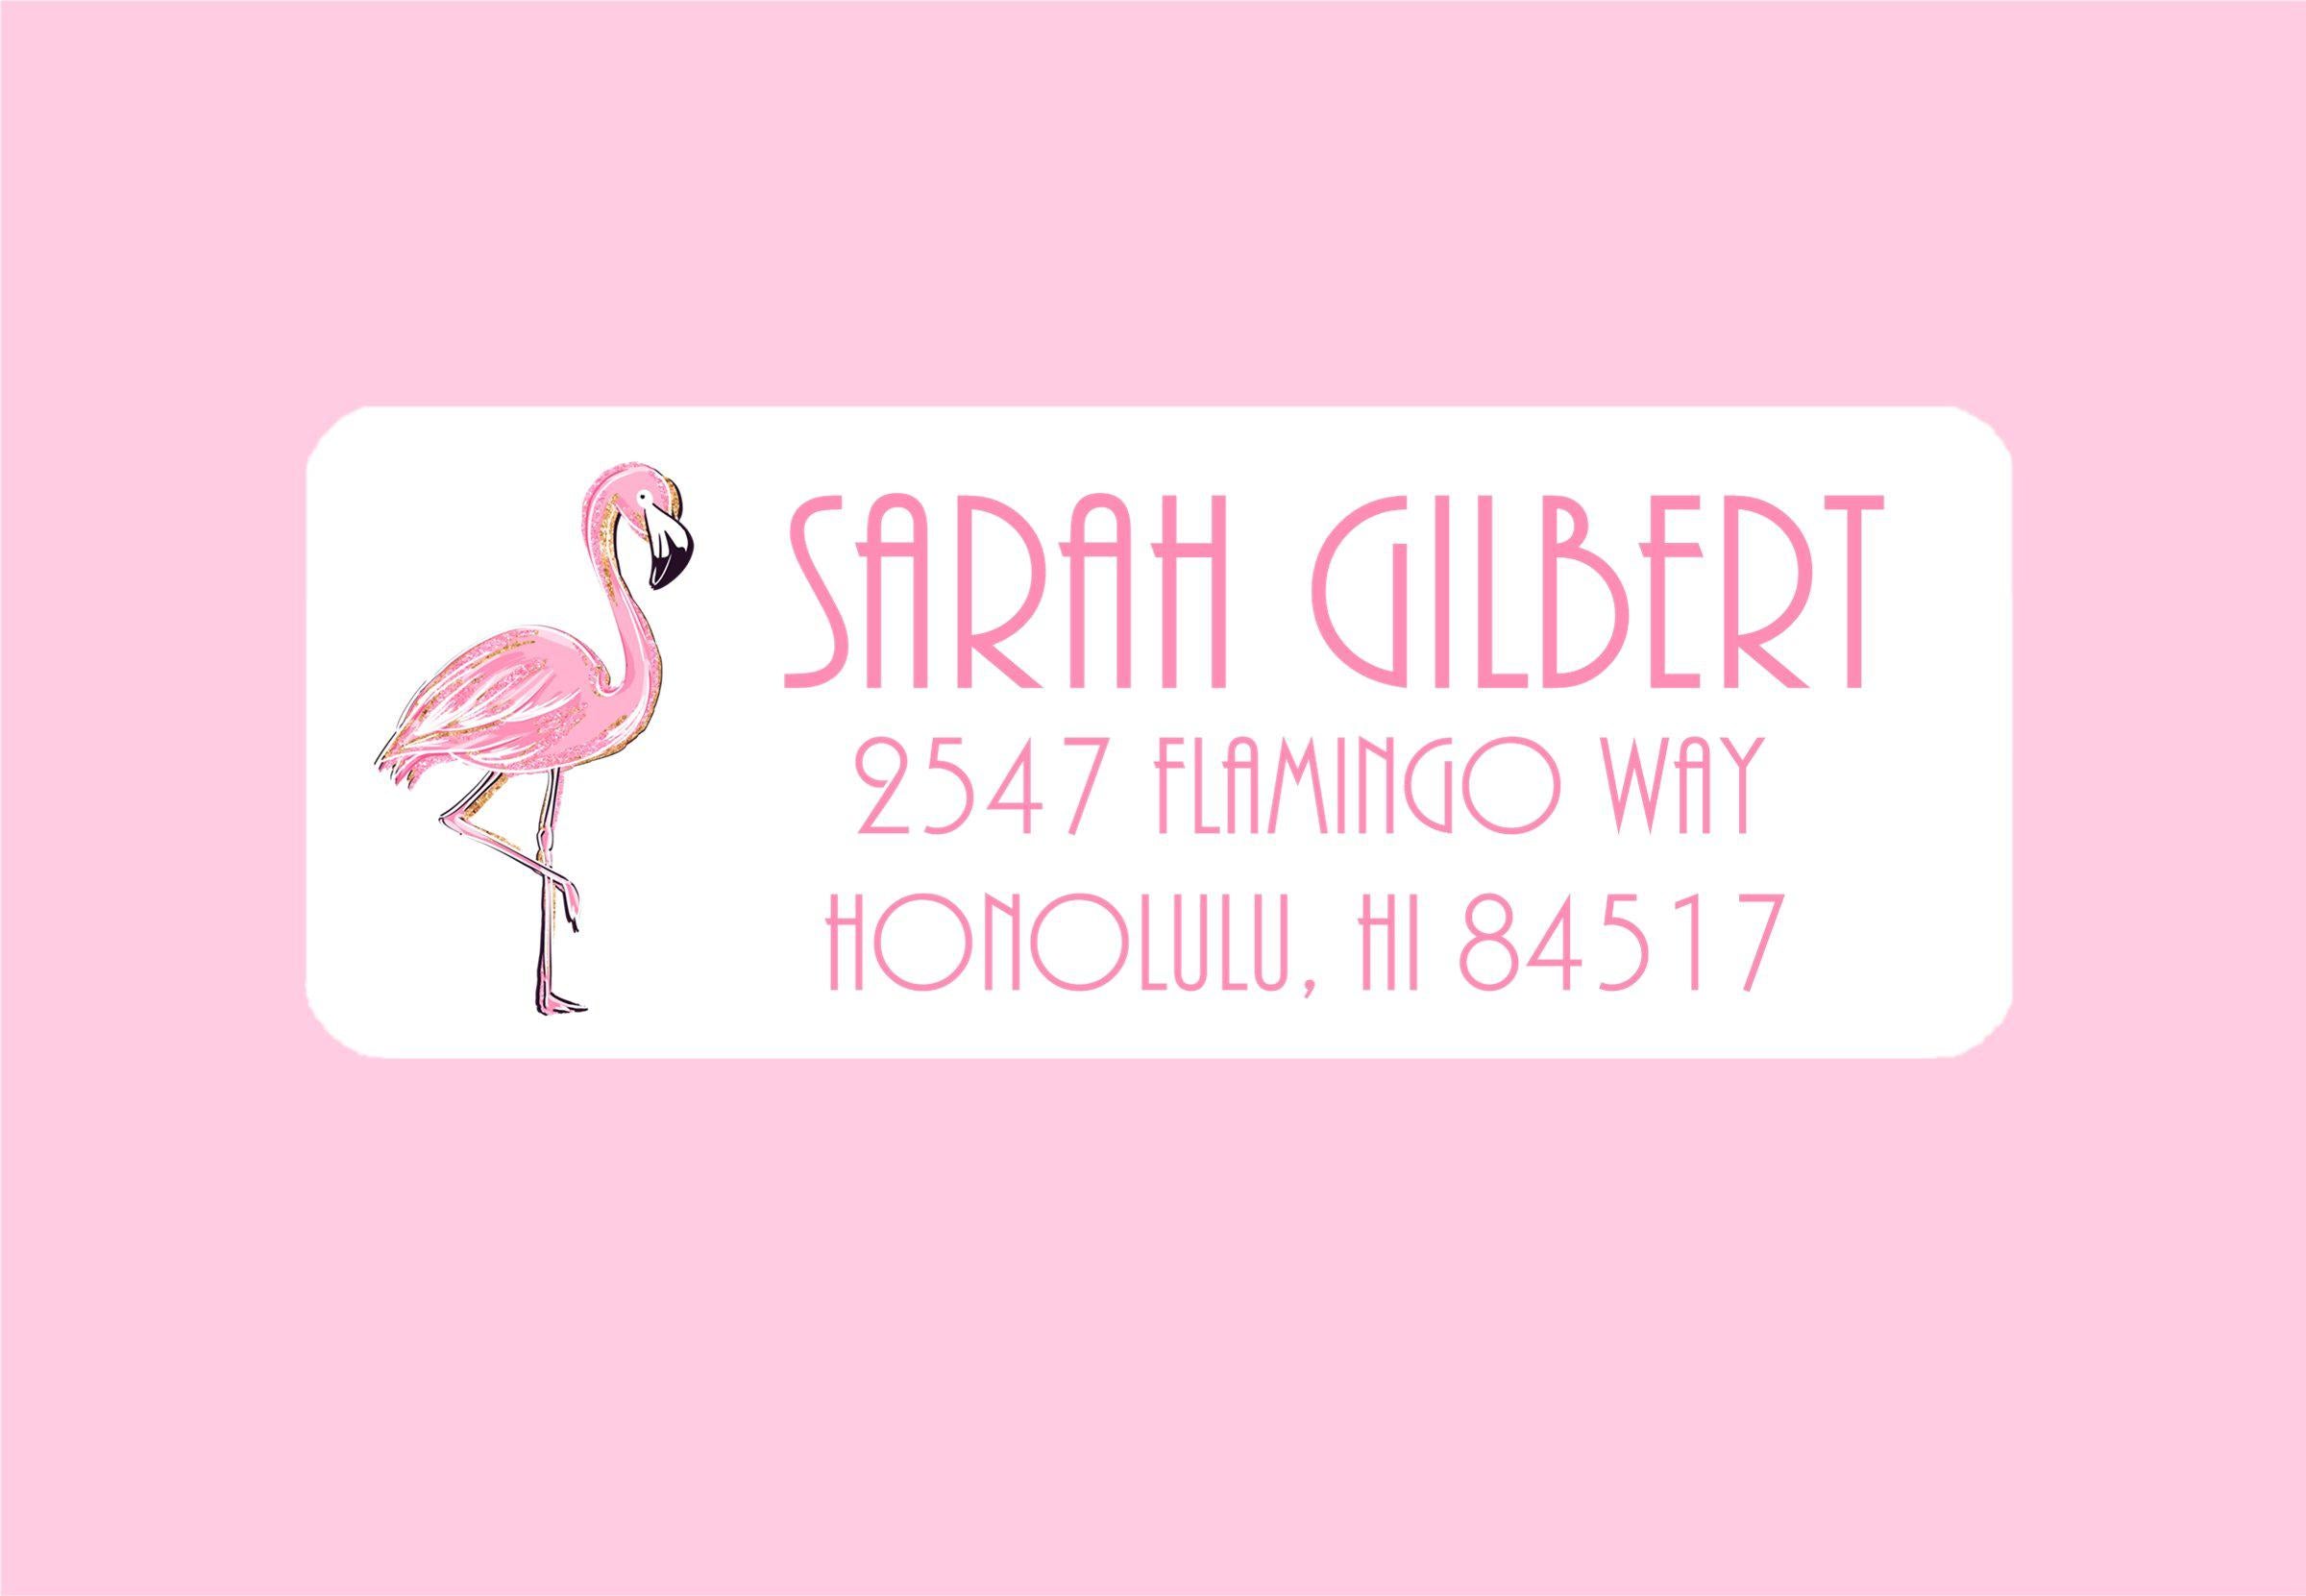 Flamingo Address Labels